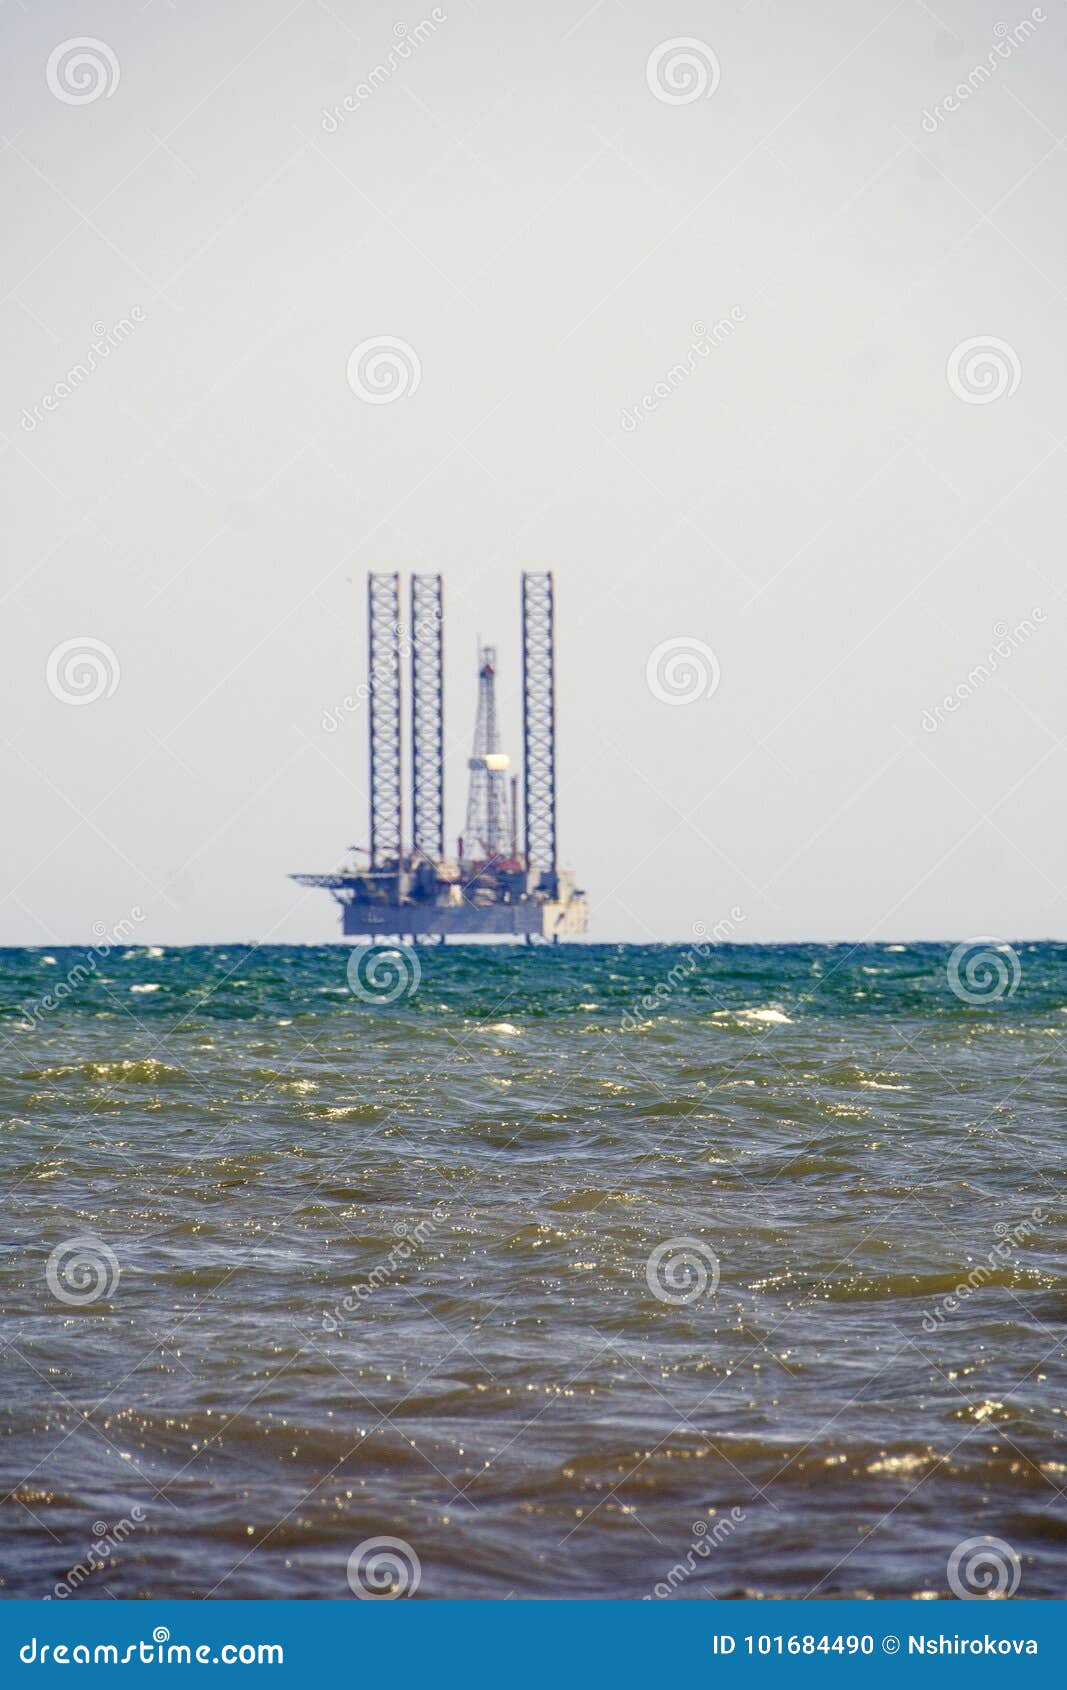 oil rig in the mediterranian sea